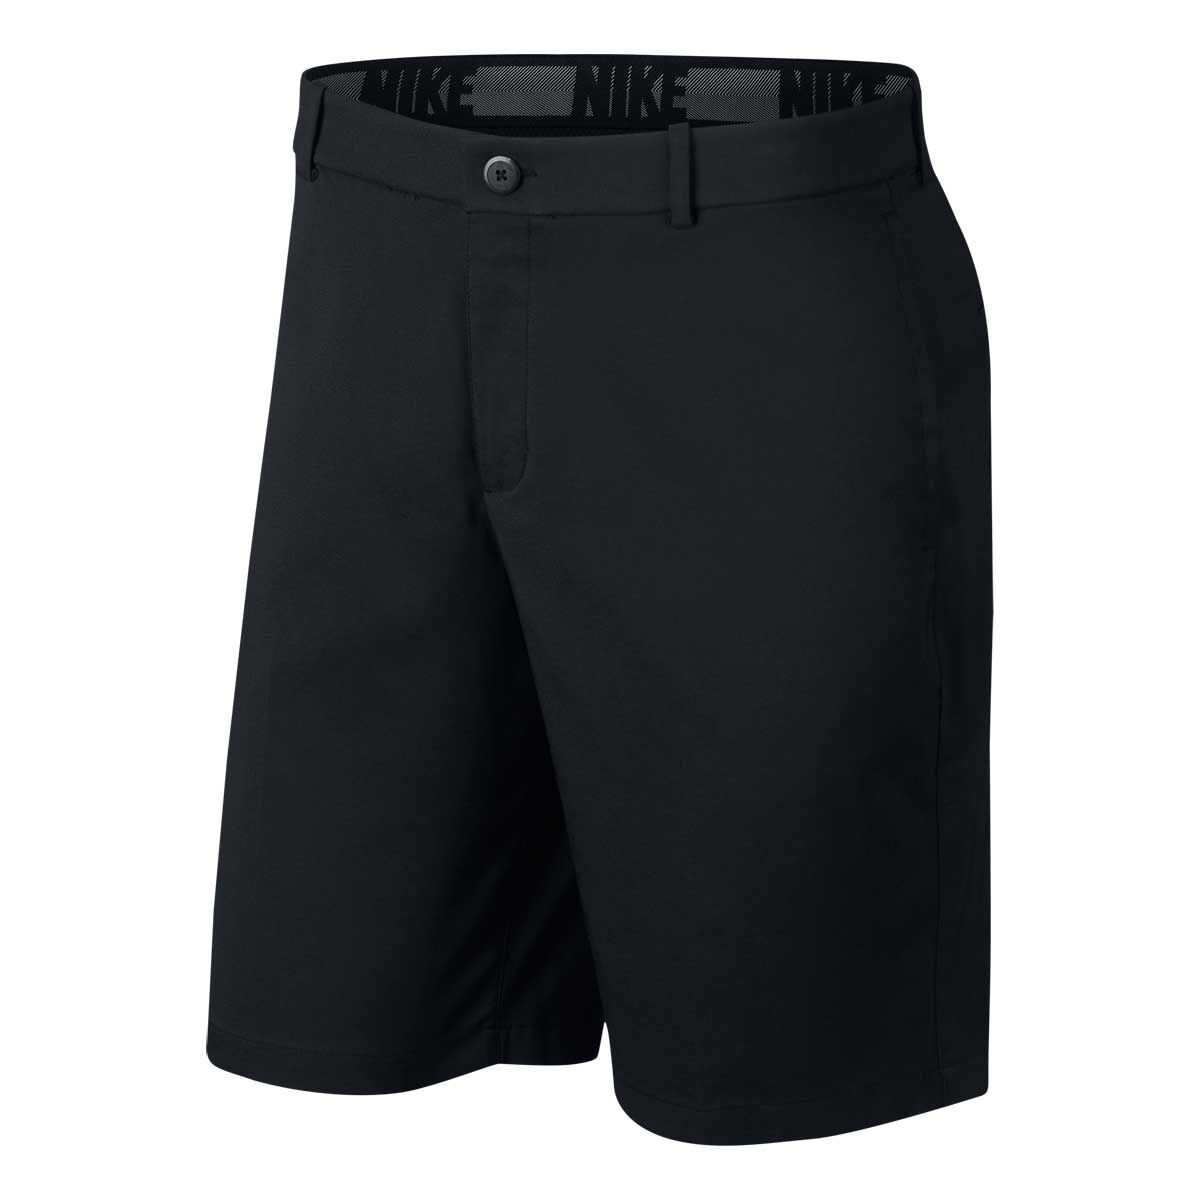 nike core flex shorts